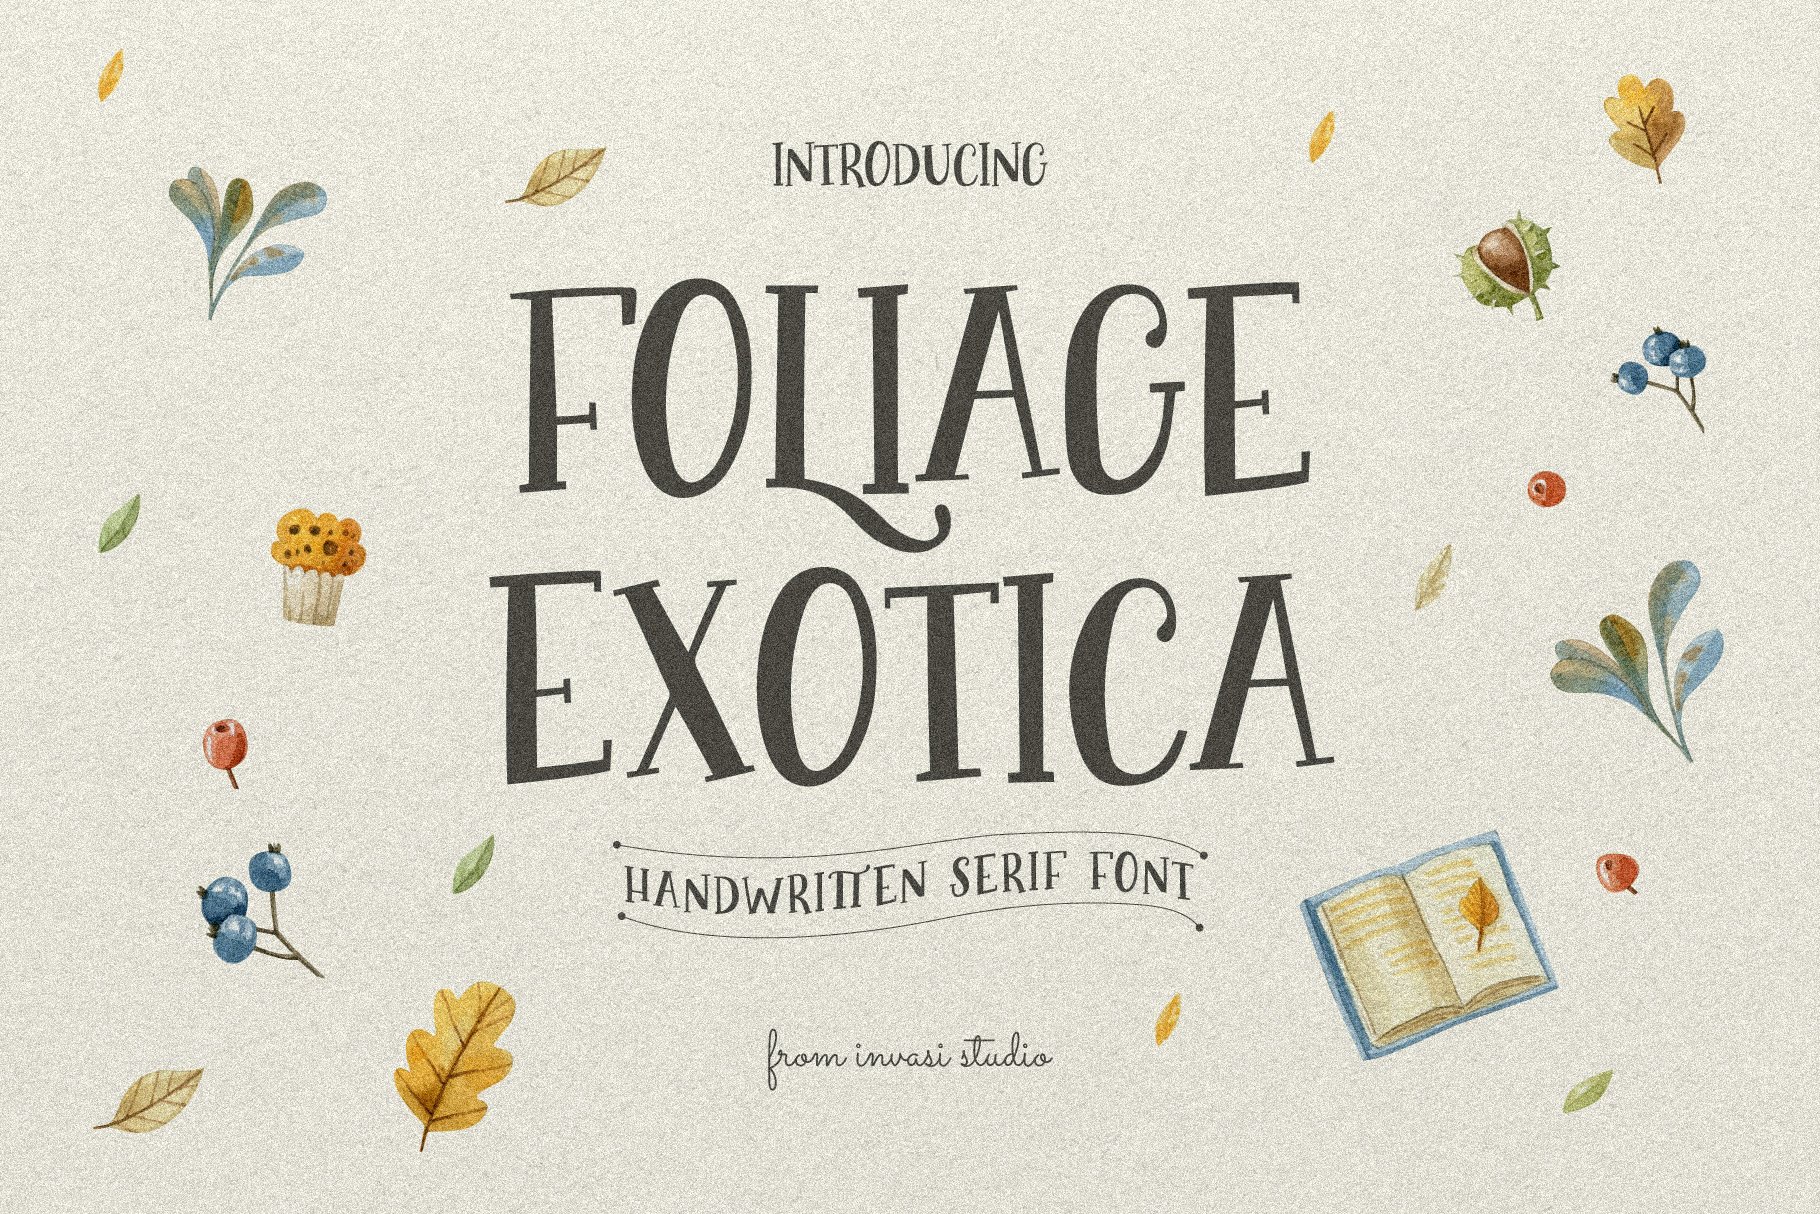 Foliage Exotica - Handwritten Serif cover image.